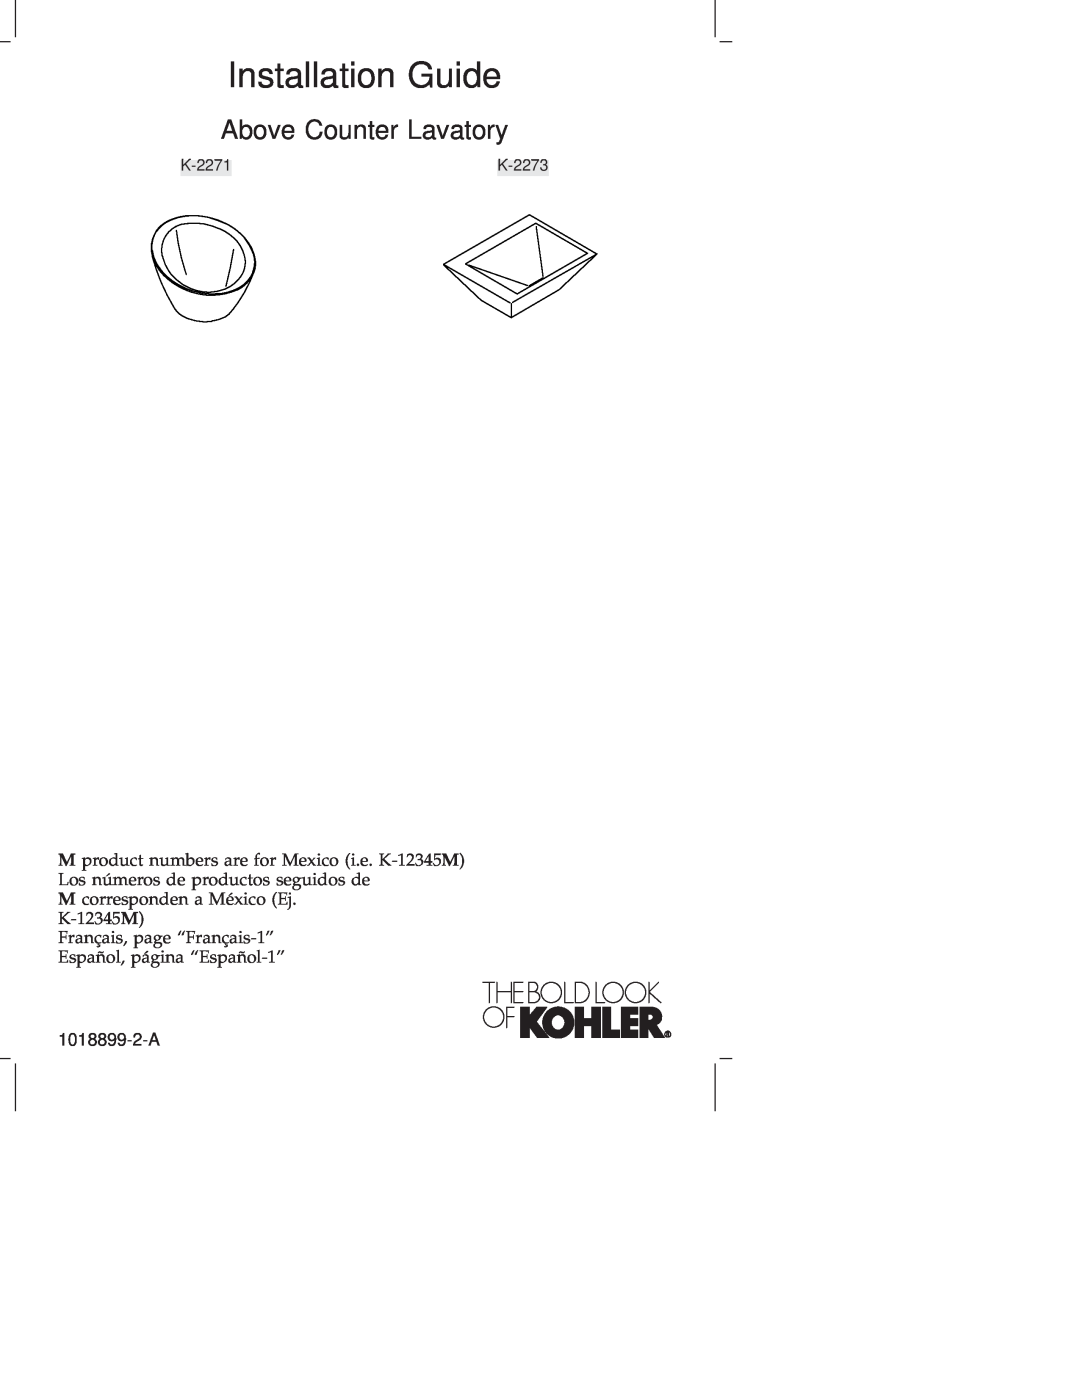 Kohler K-2271, K-2273 manual Above Counter Lavatory, Installation Guide 